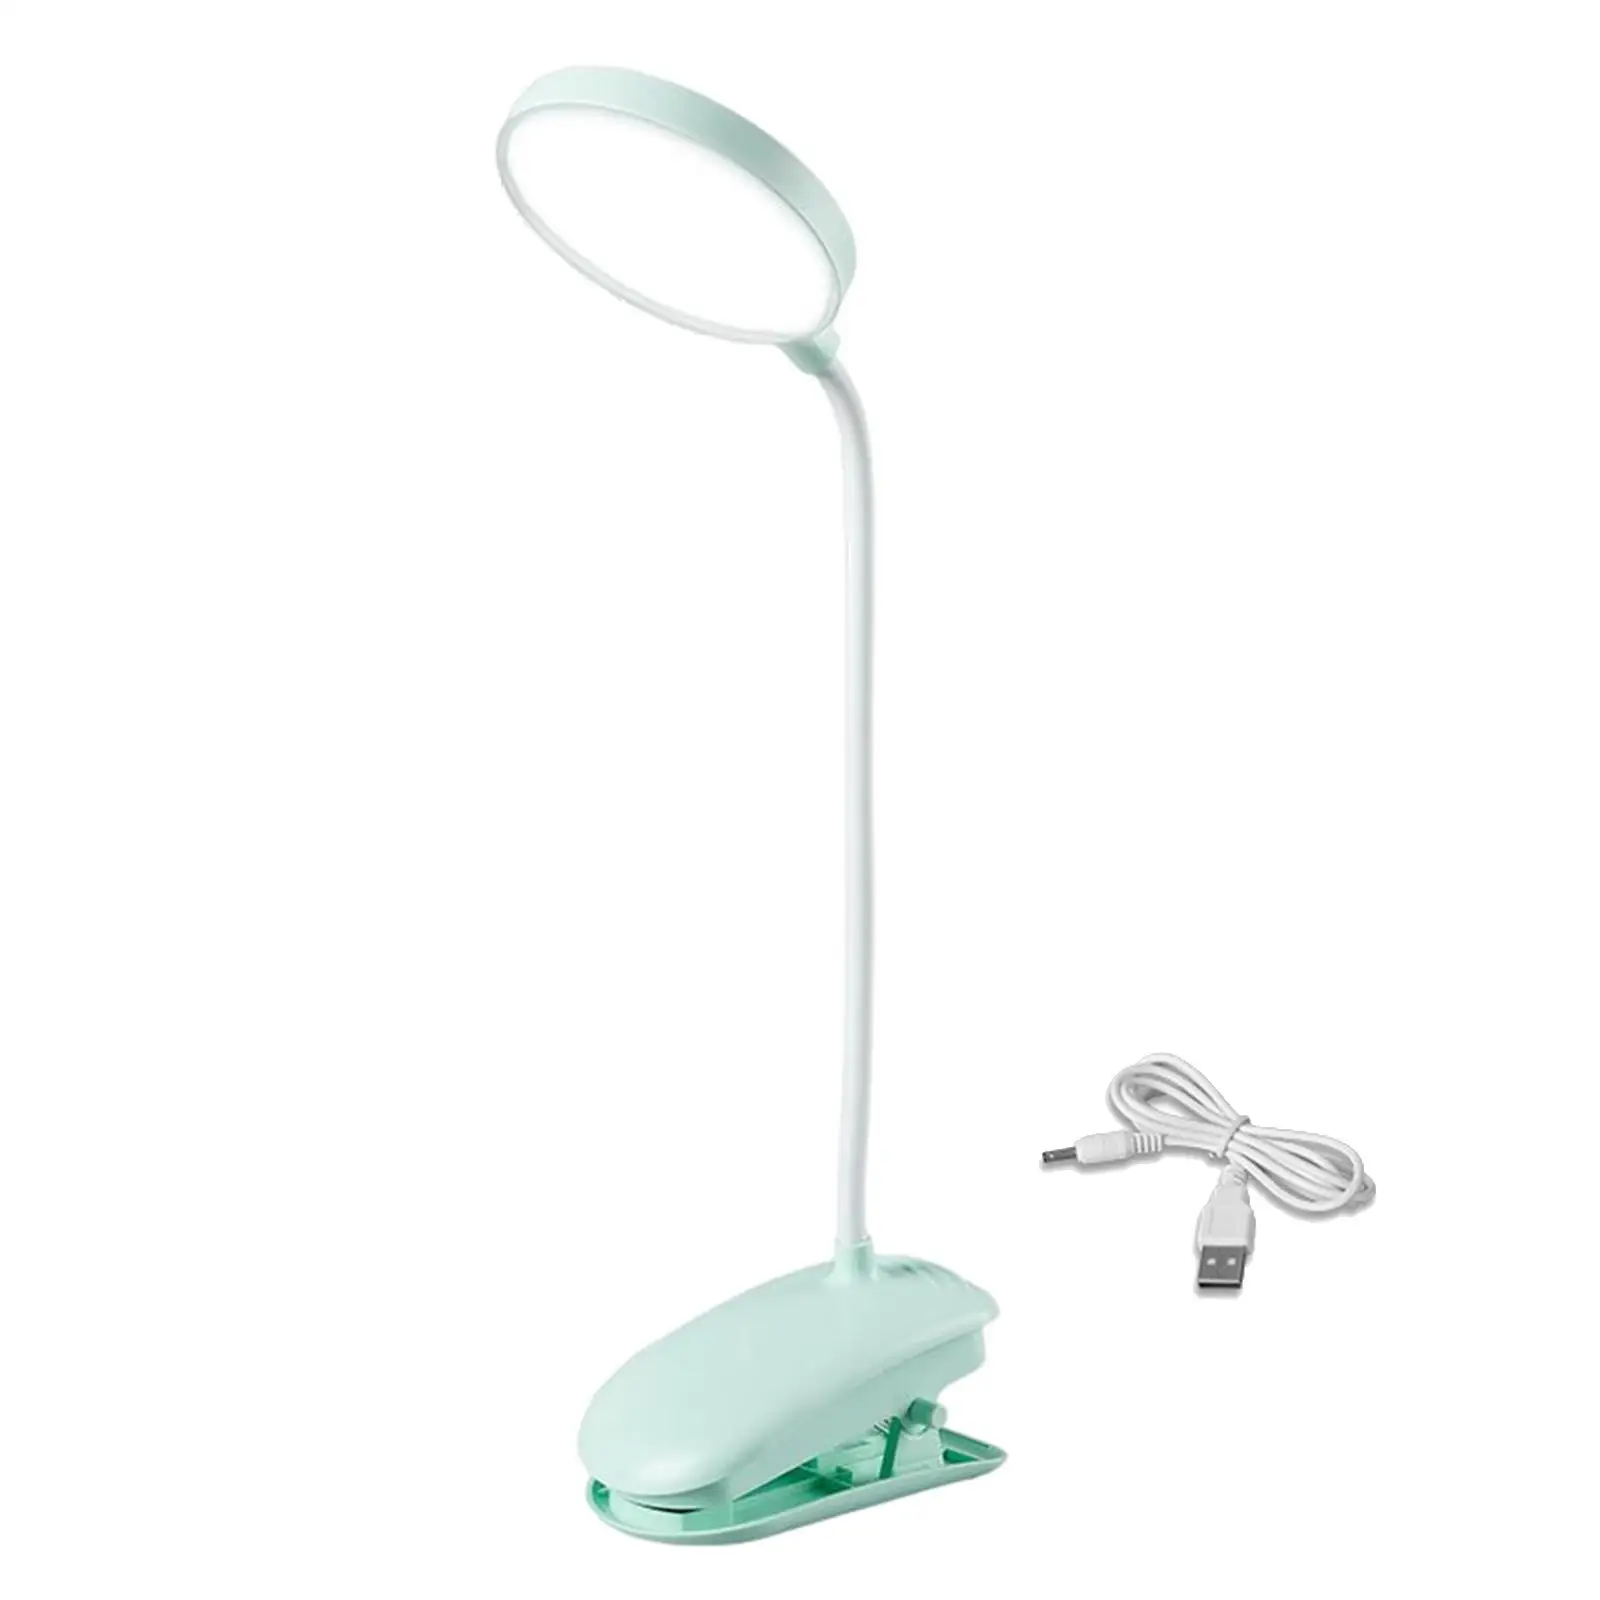 LED Desk Light Table Lamp Clip On USB Dimmable Eye Caring Adjustable Flexible for Living Room Bedside Home Bedroom Study